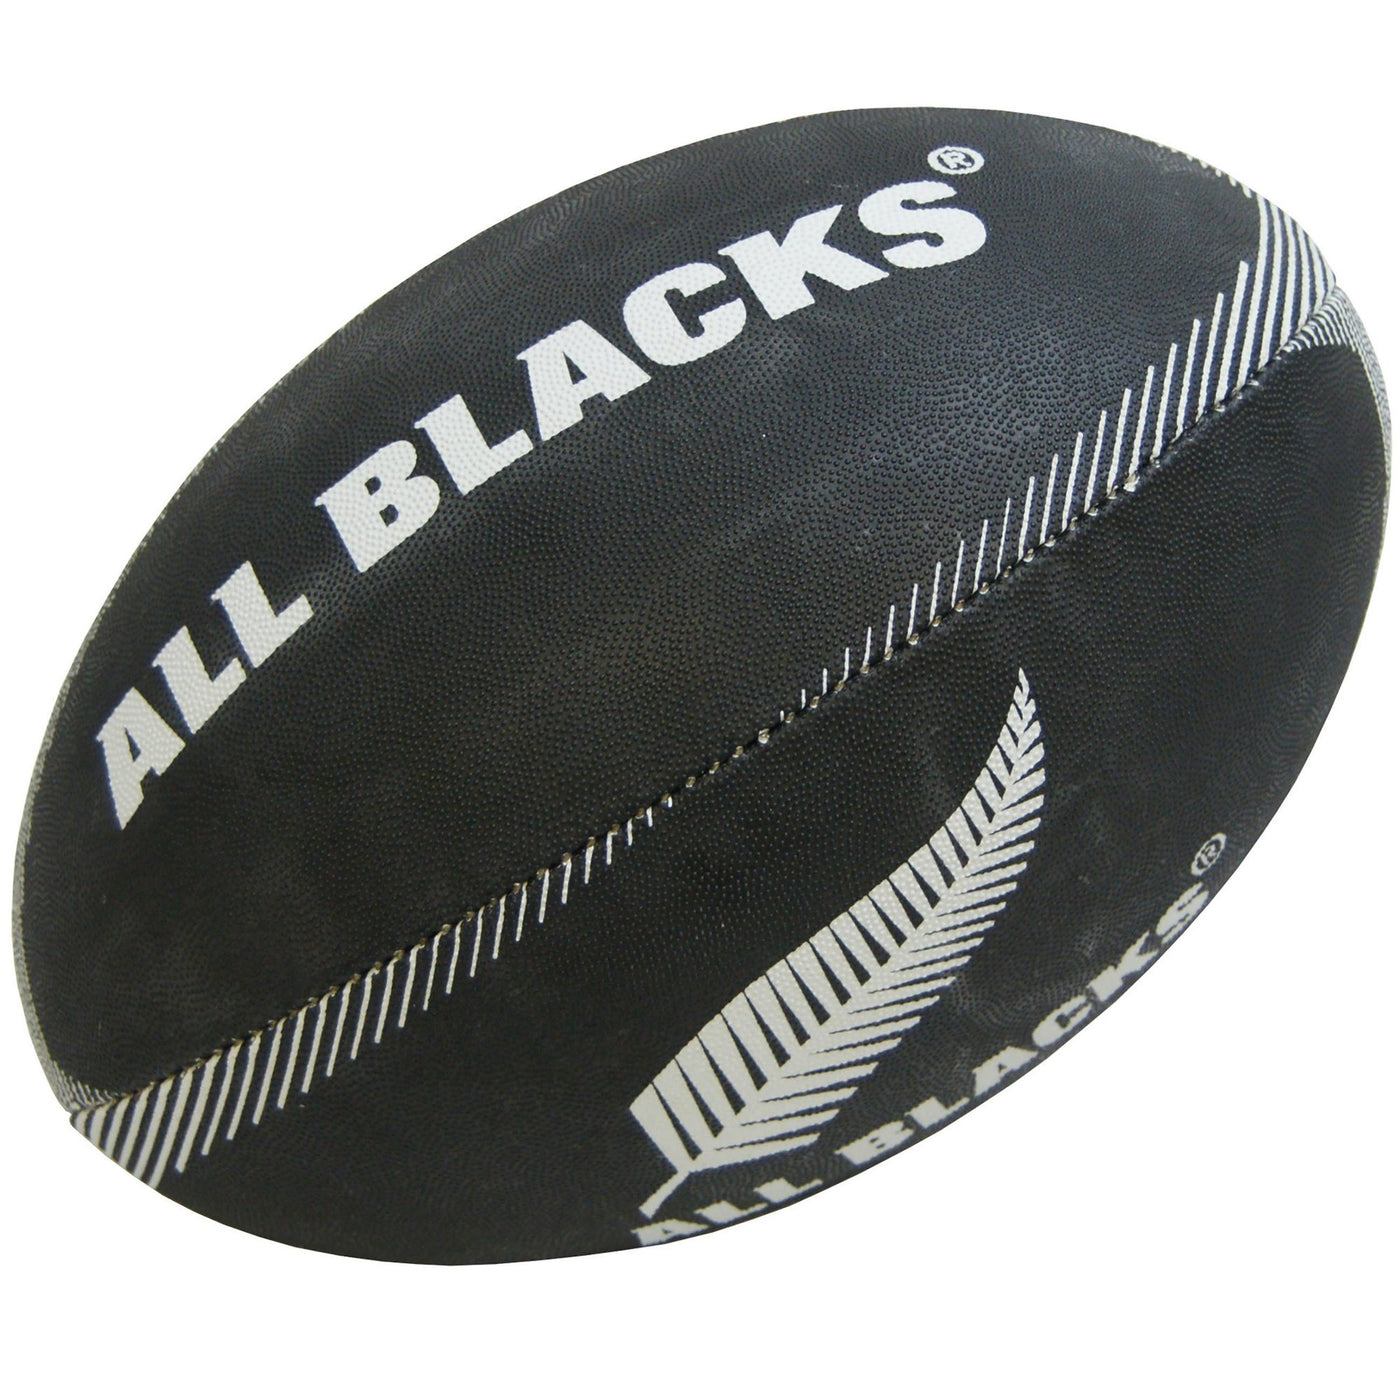 All Blacks Midi Rugby Ball